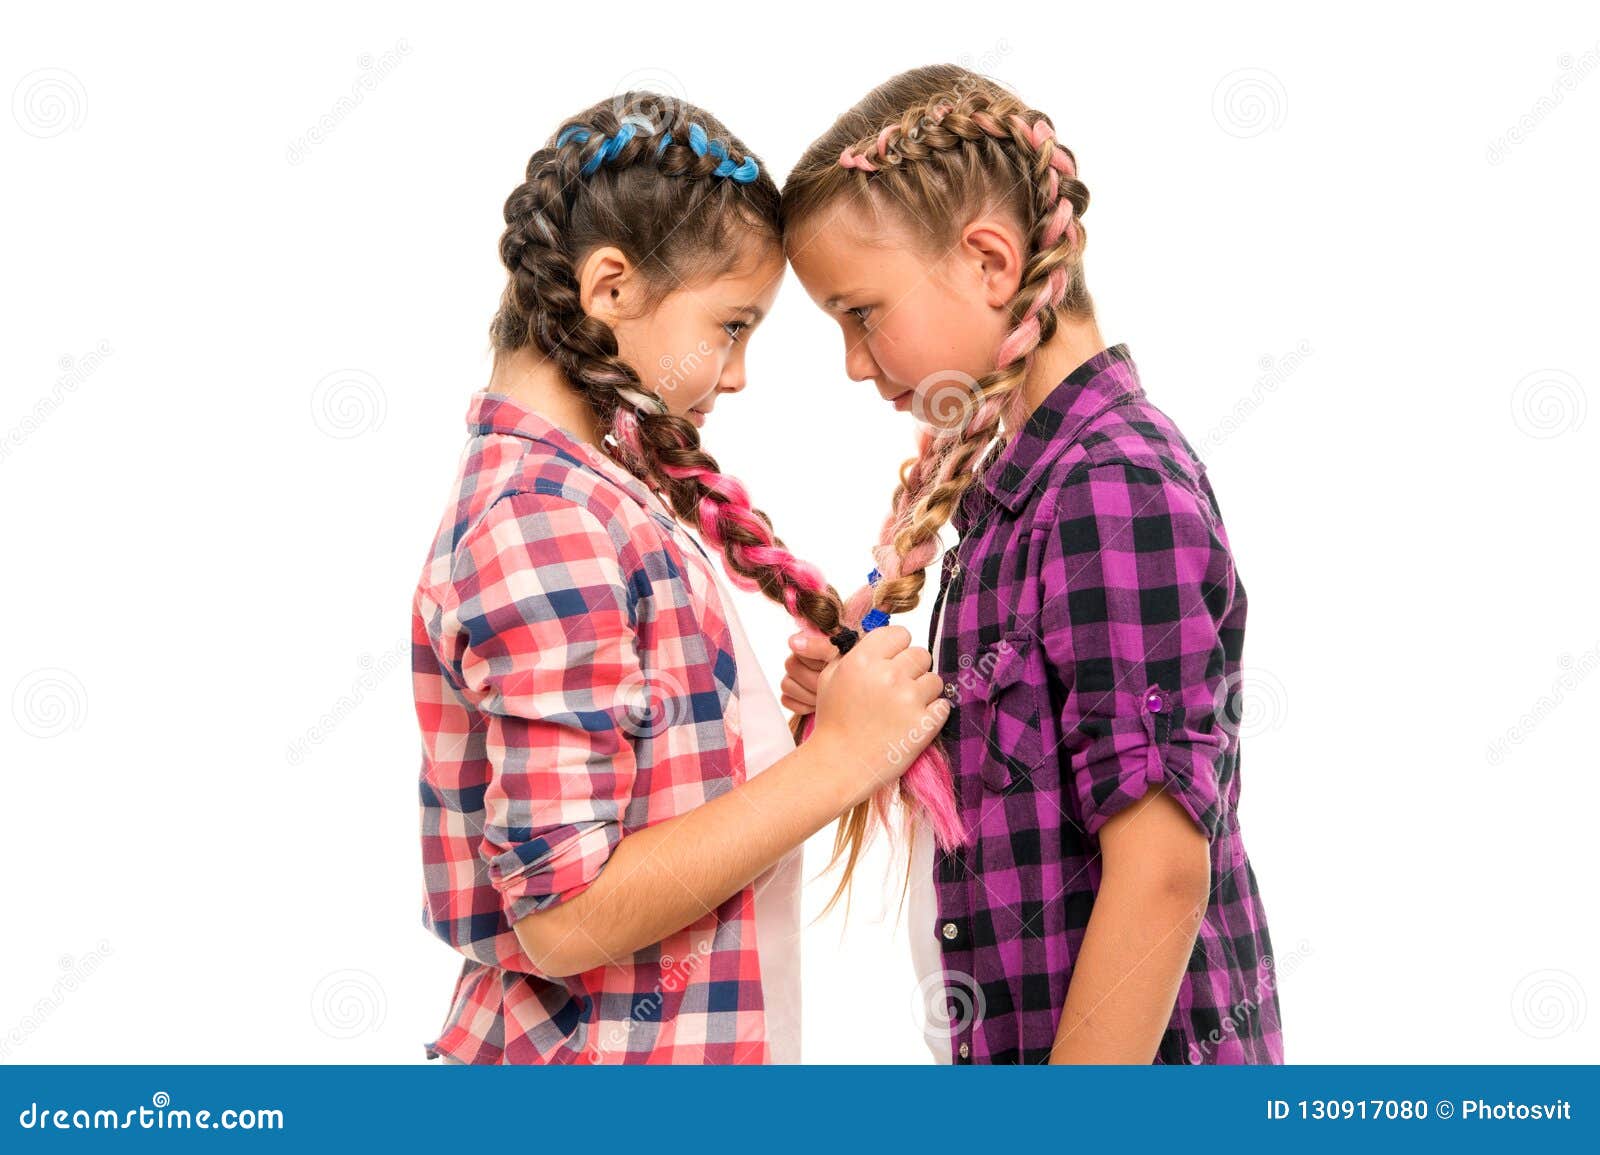 Girls Friends Similar Hairstyle Braids White Background